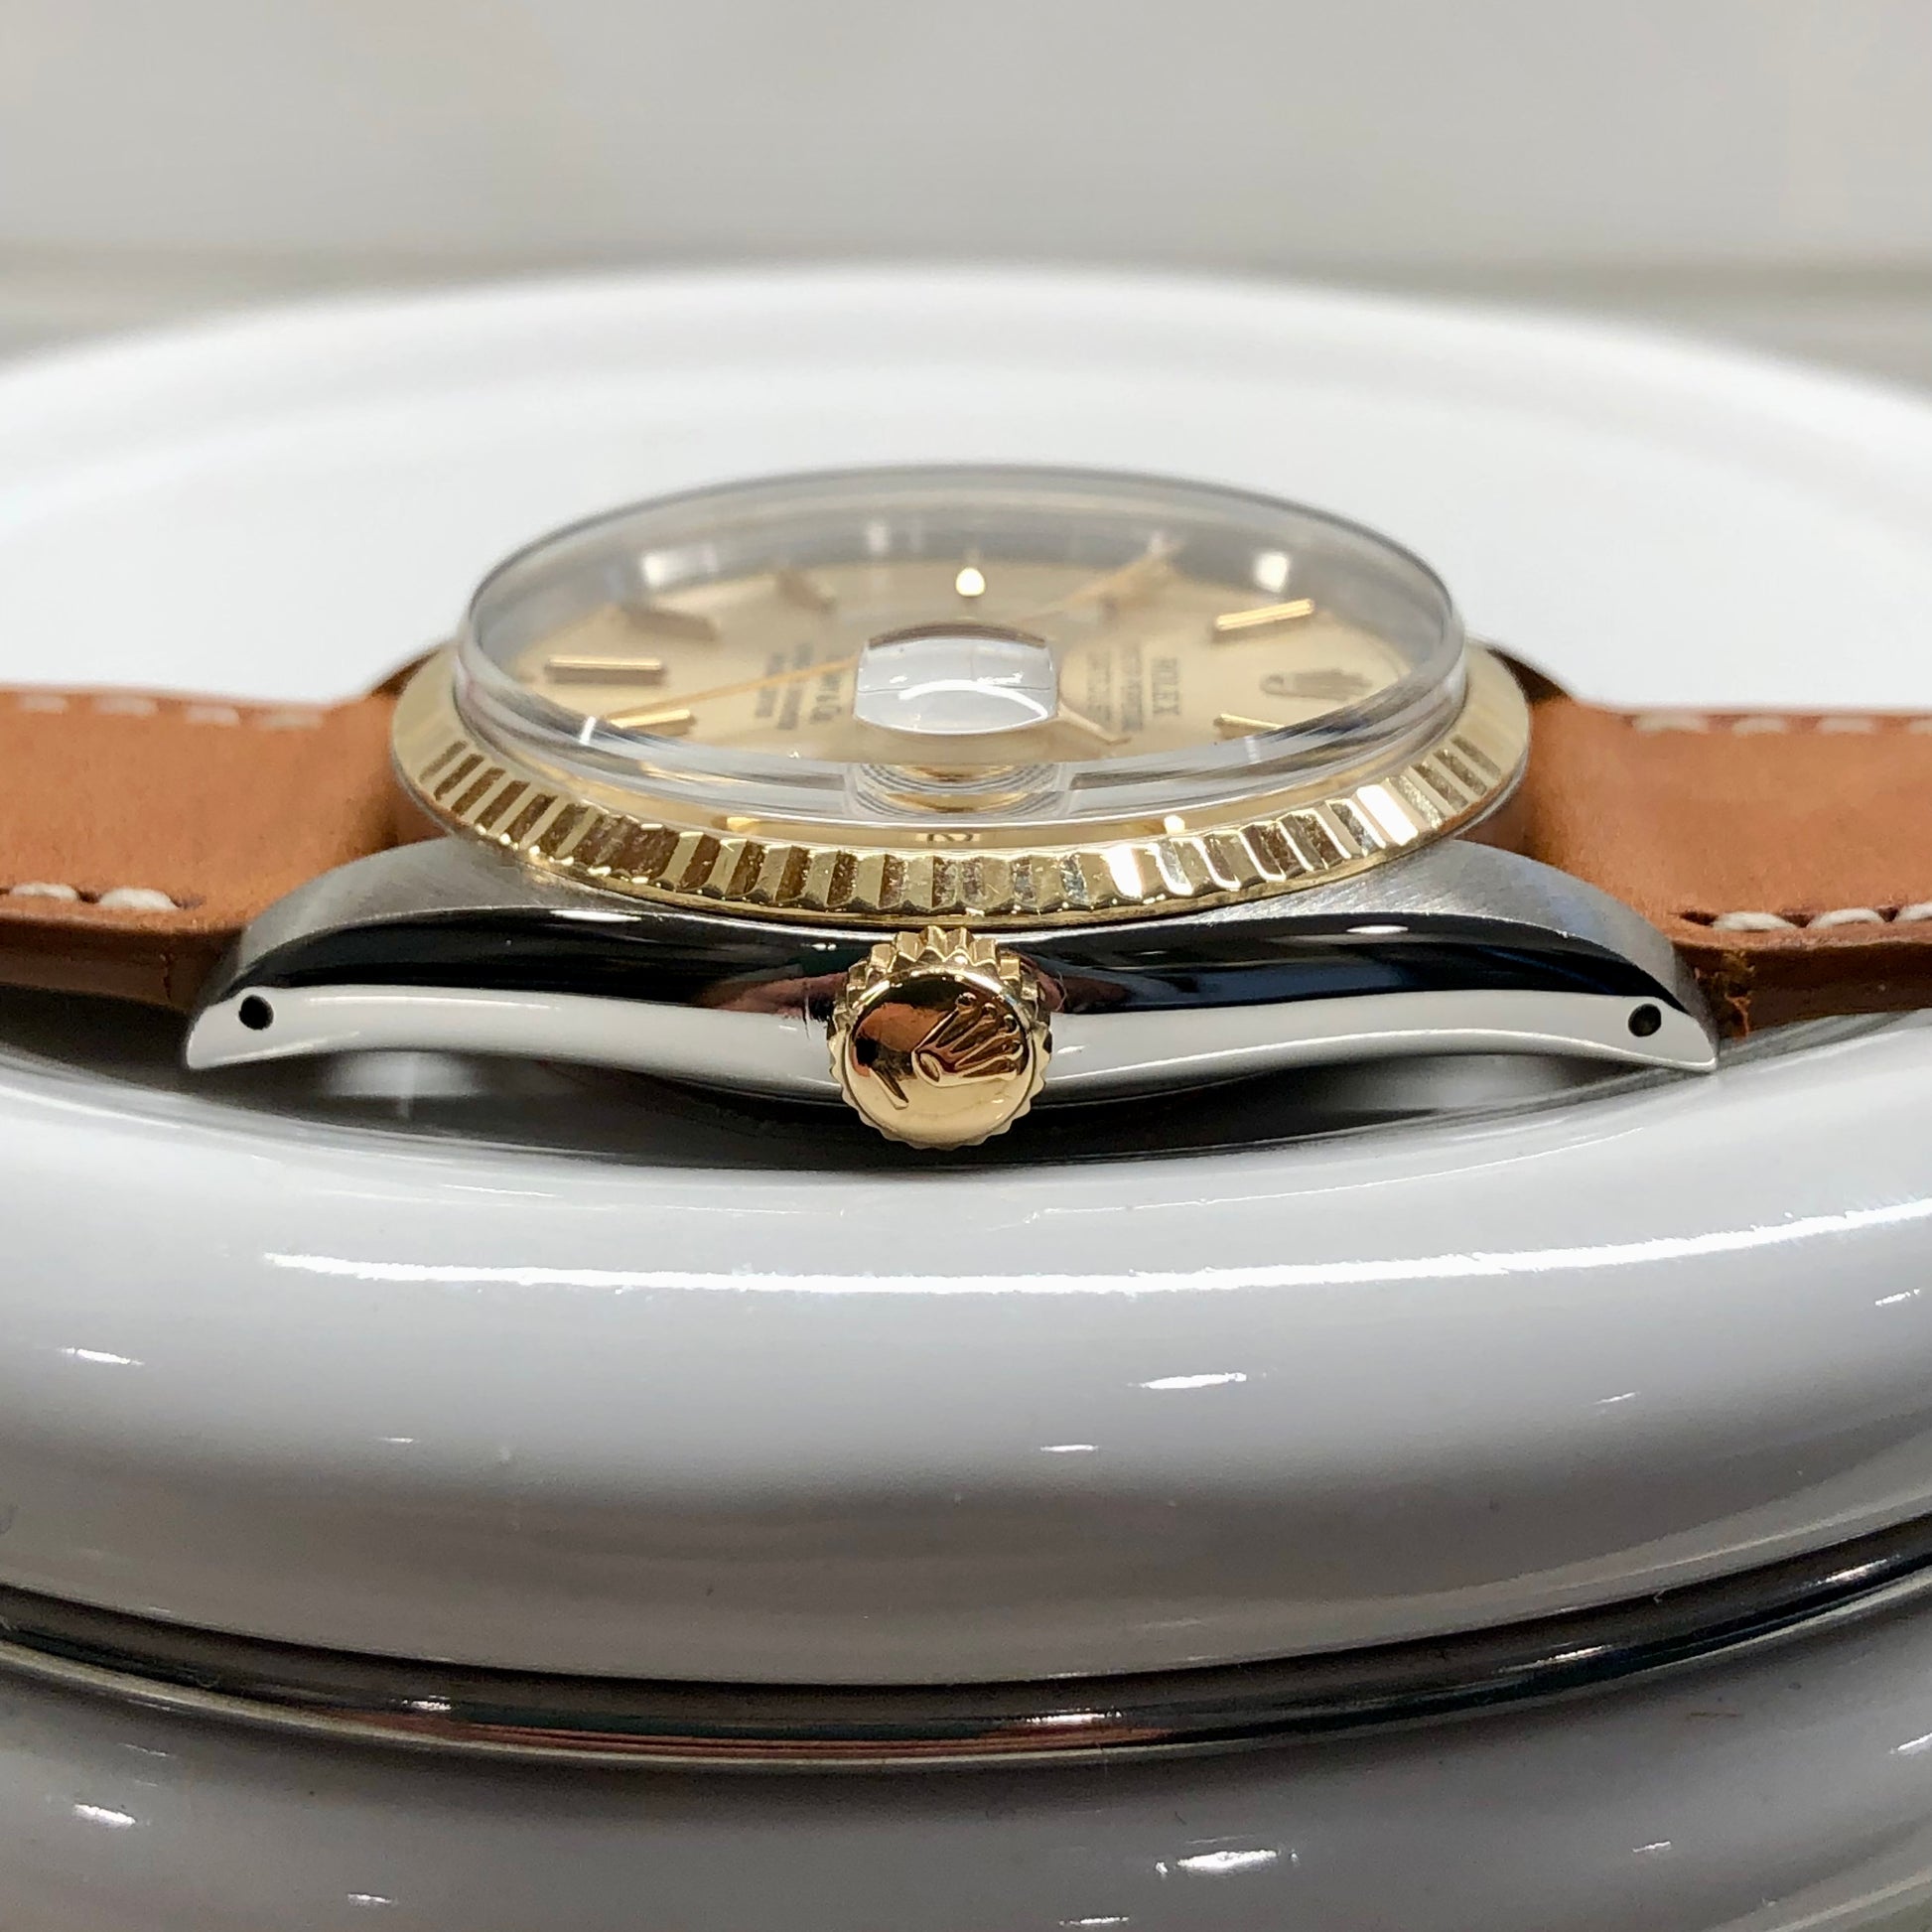 1978 Rolex Datejust 16013 Two Tone Tiffany & Co. Champagne Dial Wristwatch - Hashtag Watch Company